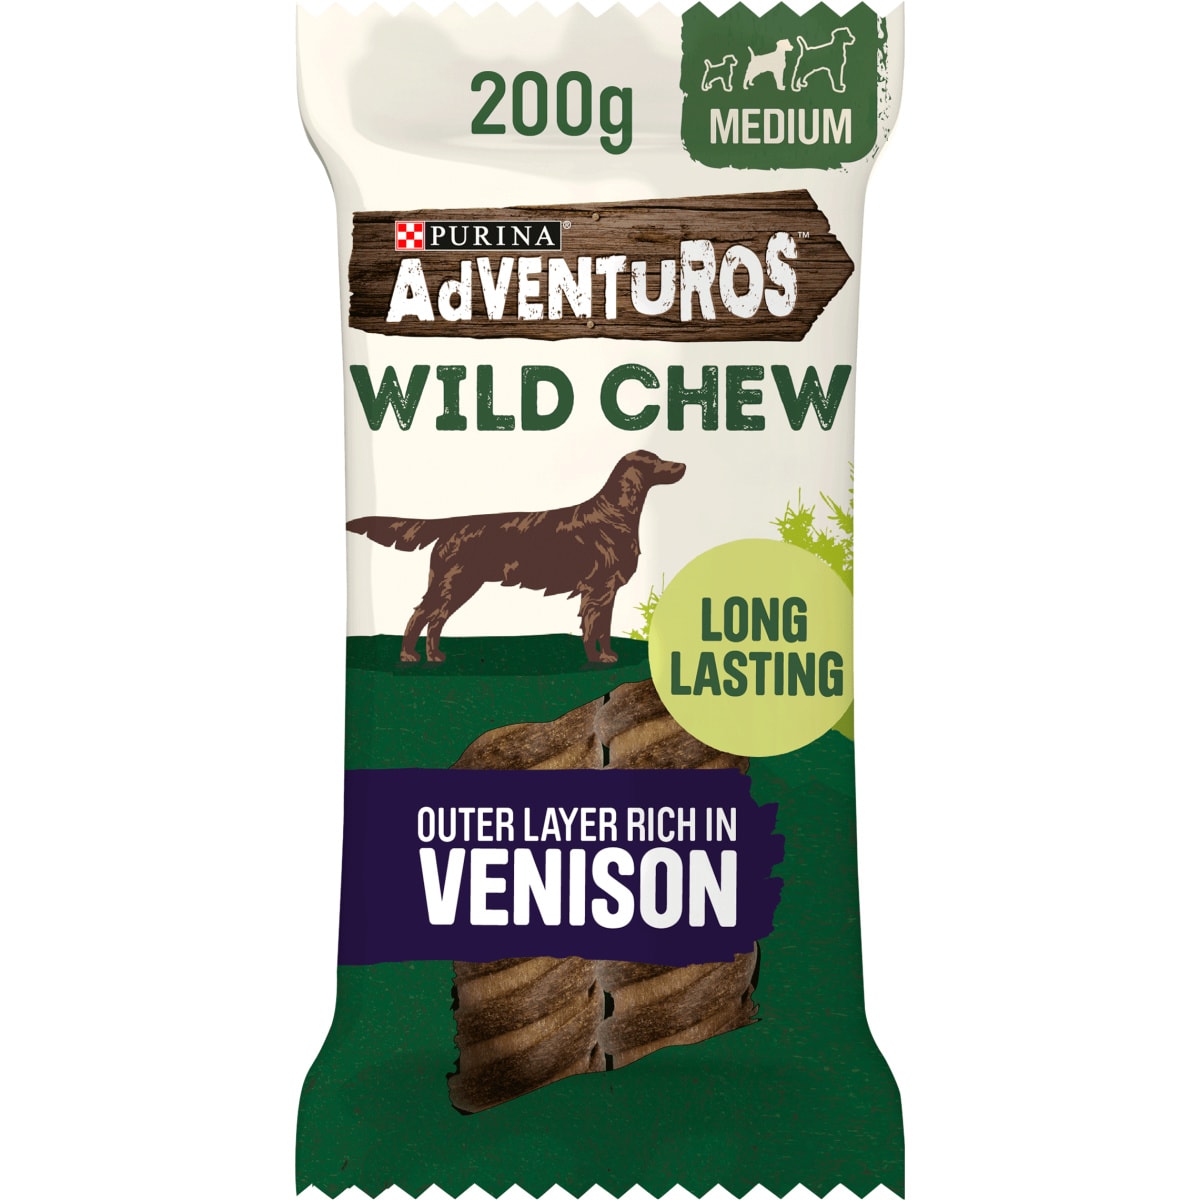 Adventuros Wild Chew Main Image